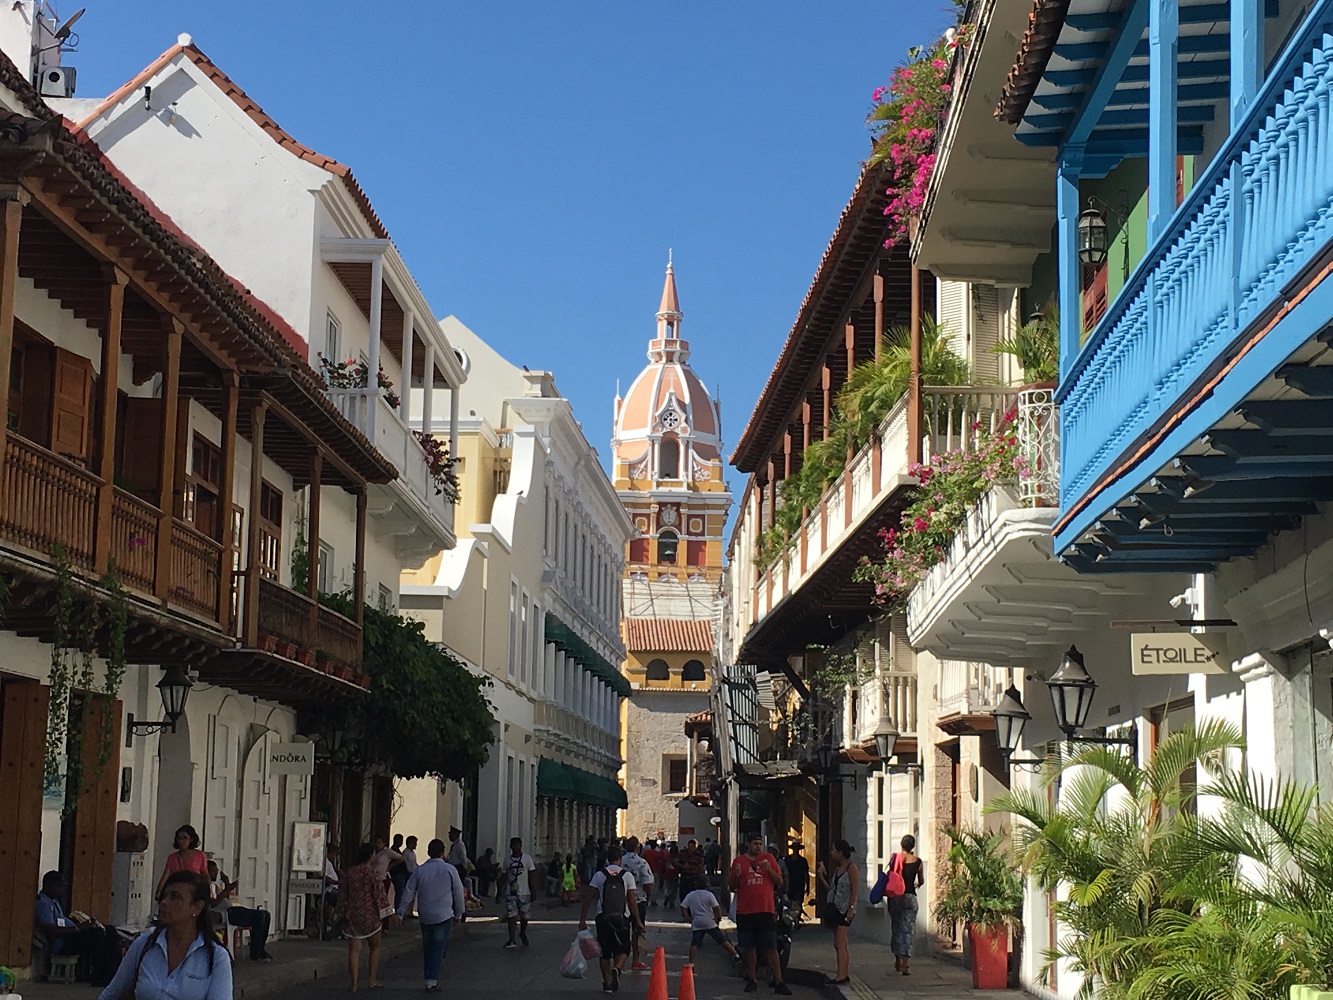 Mein Schiff Destination: Koloniale Altstadt von Cartagena - Kolumbien